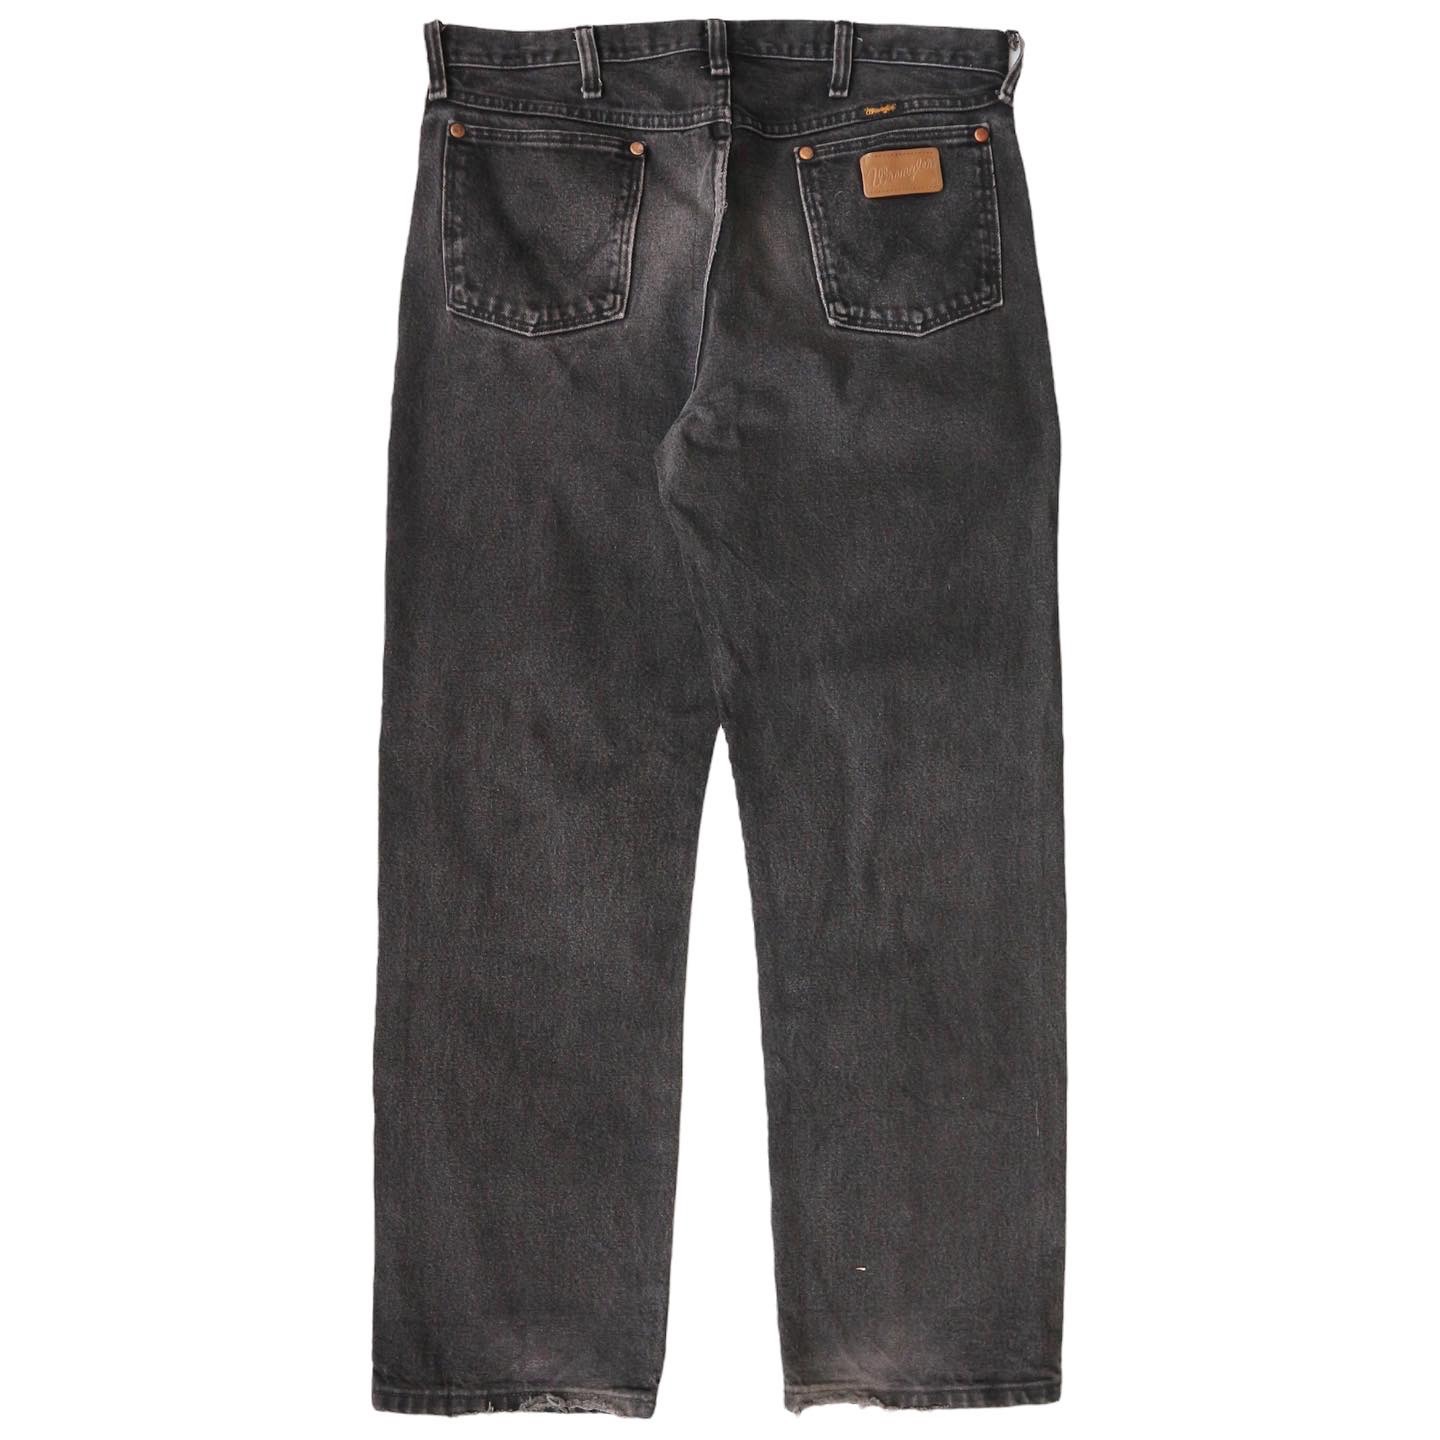 Wrangler Jeans Size 34